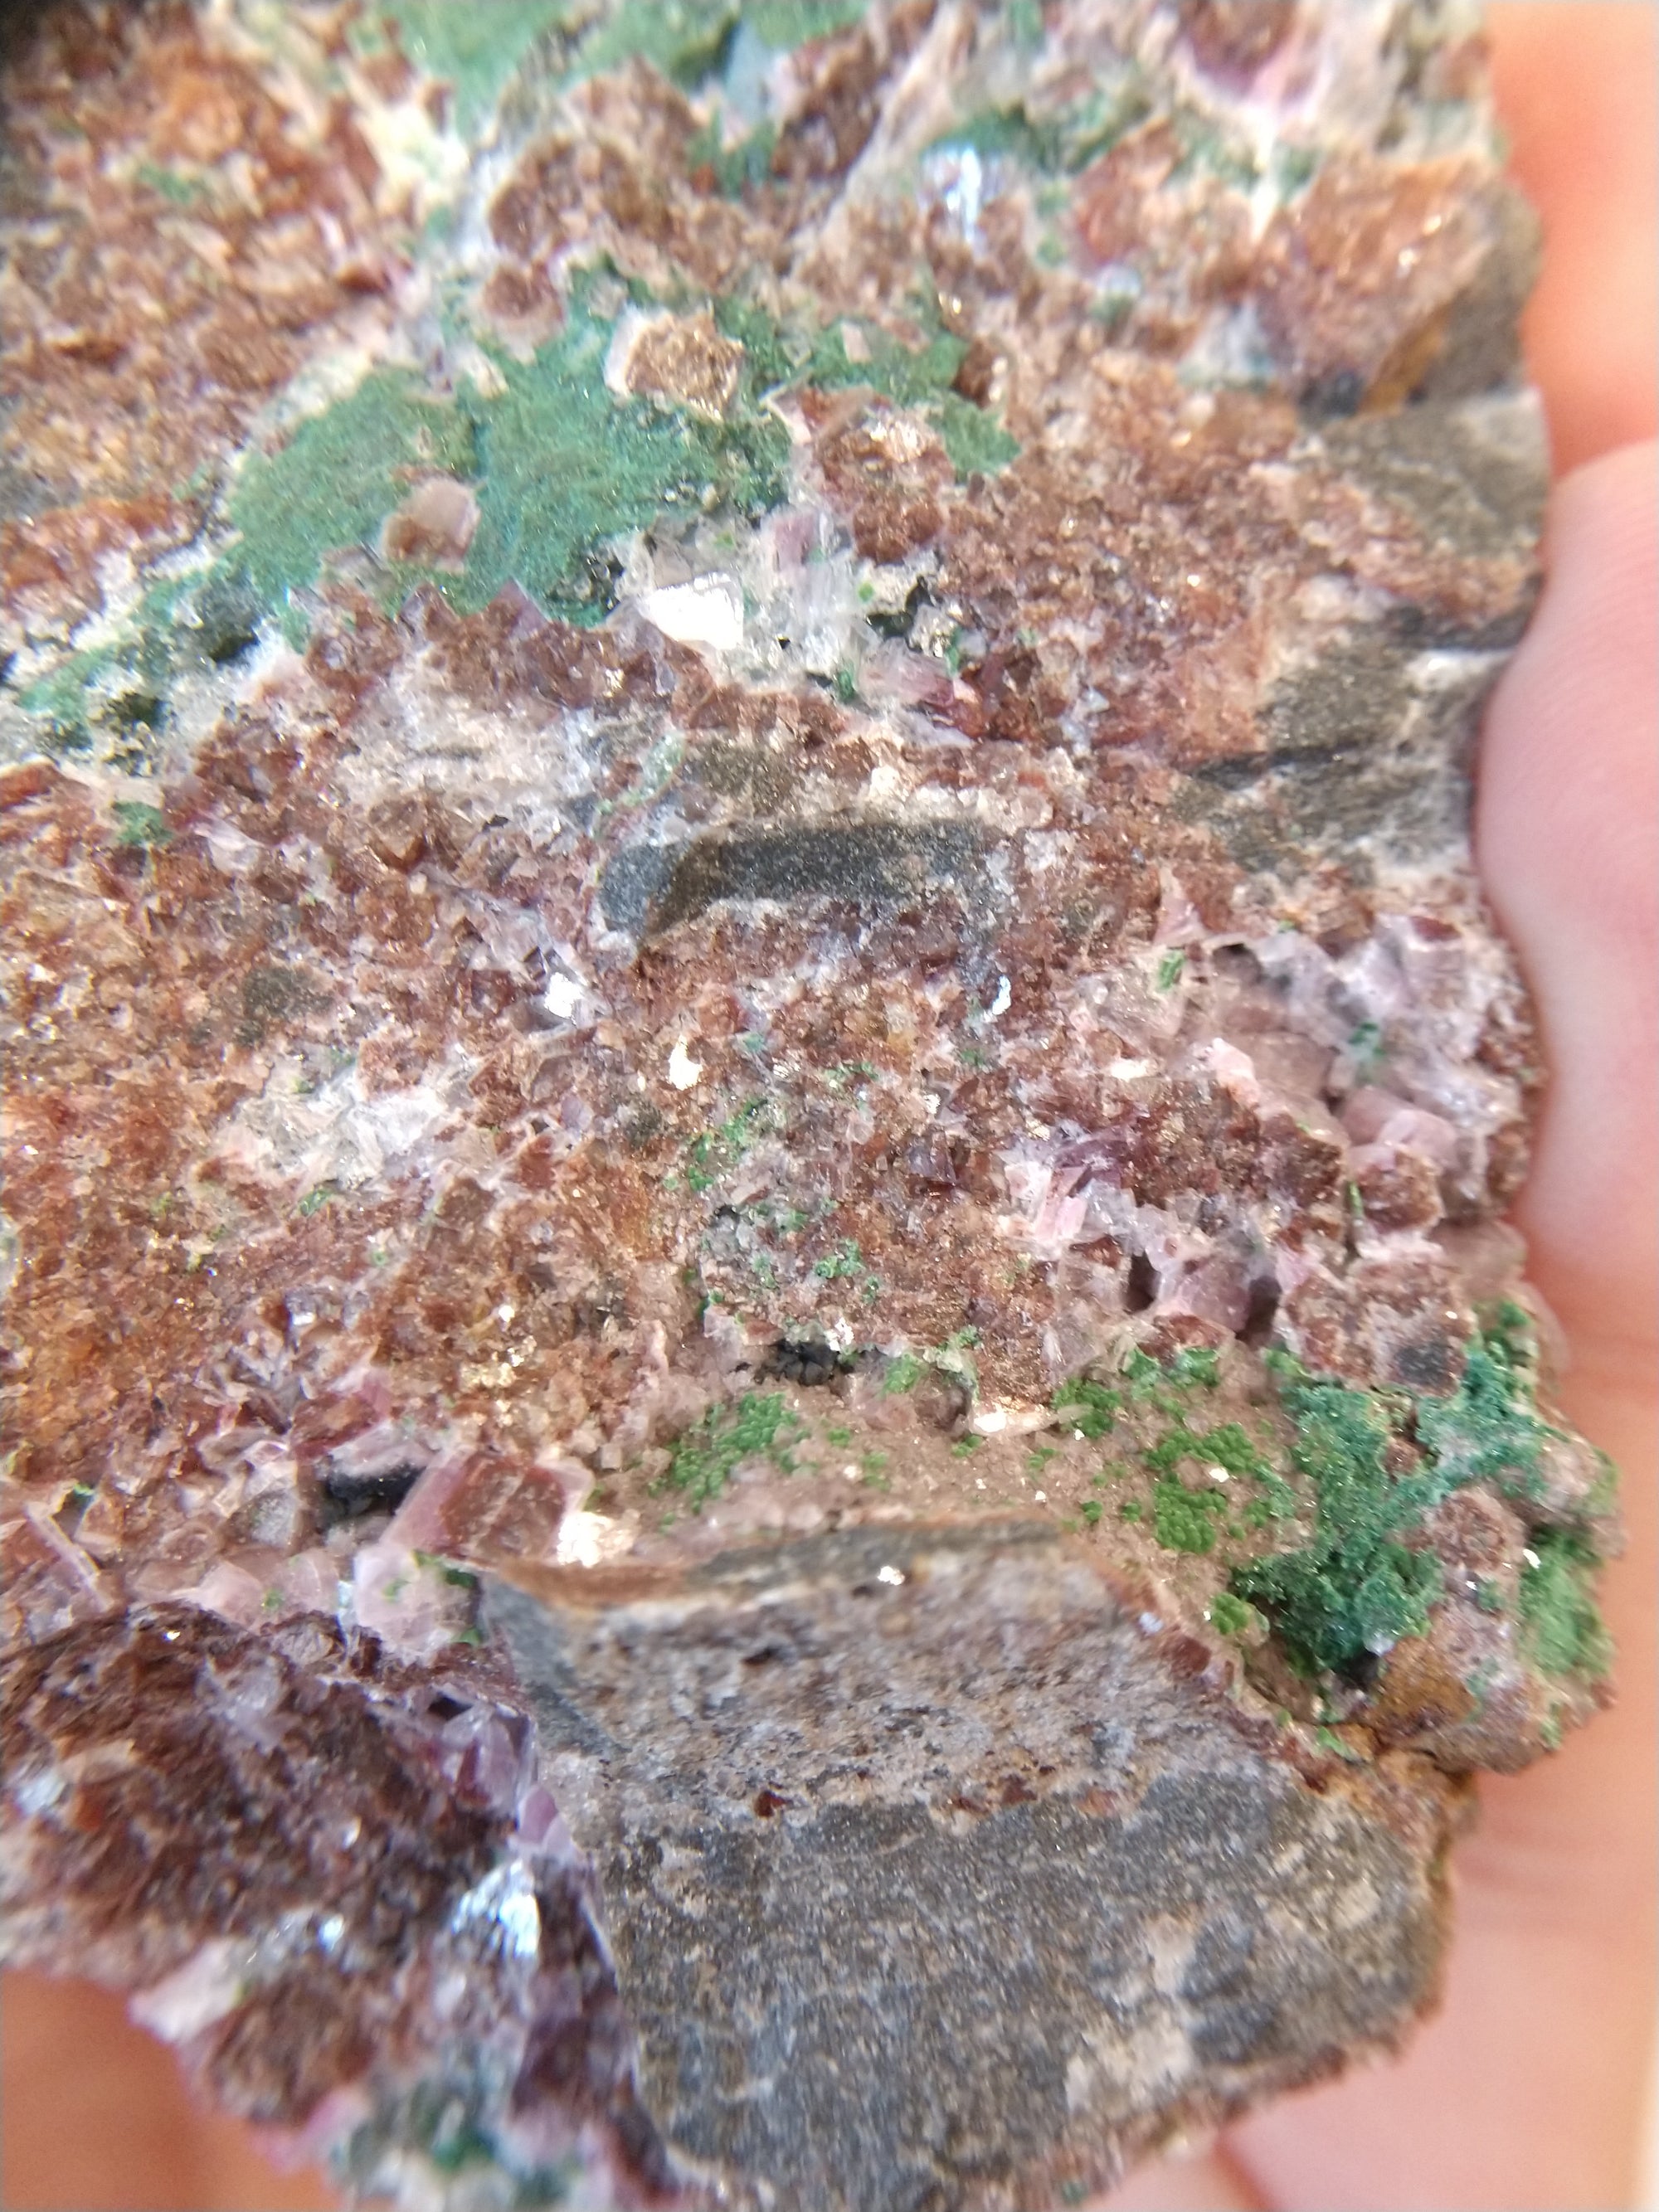 Druzy Quartz Over Malachite with Calcite from the Congo